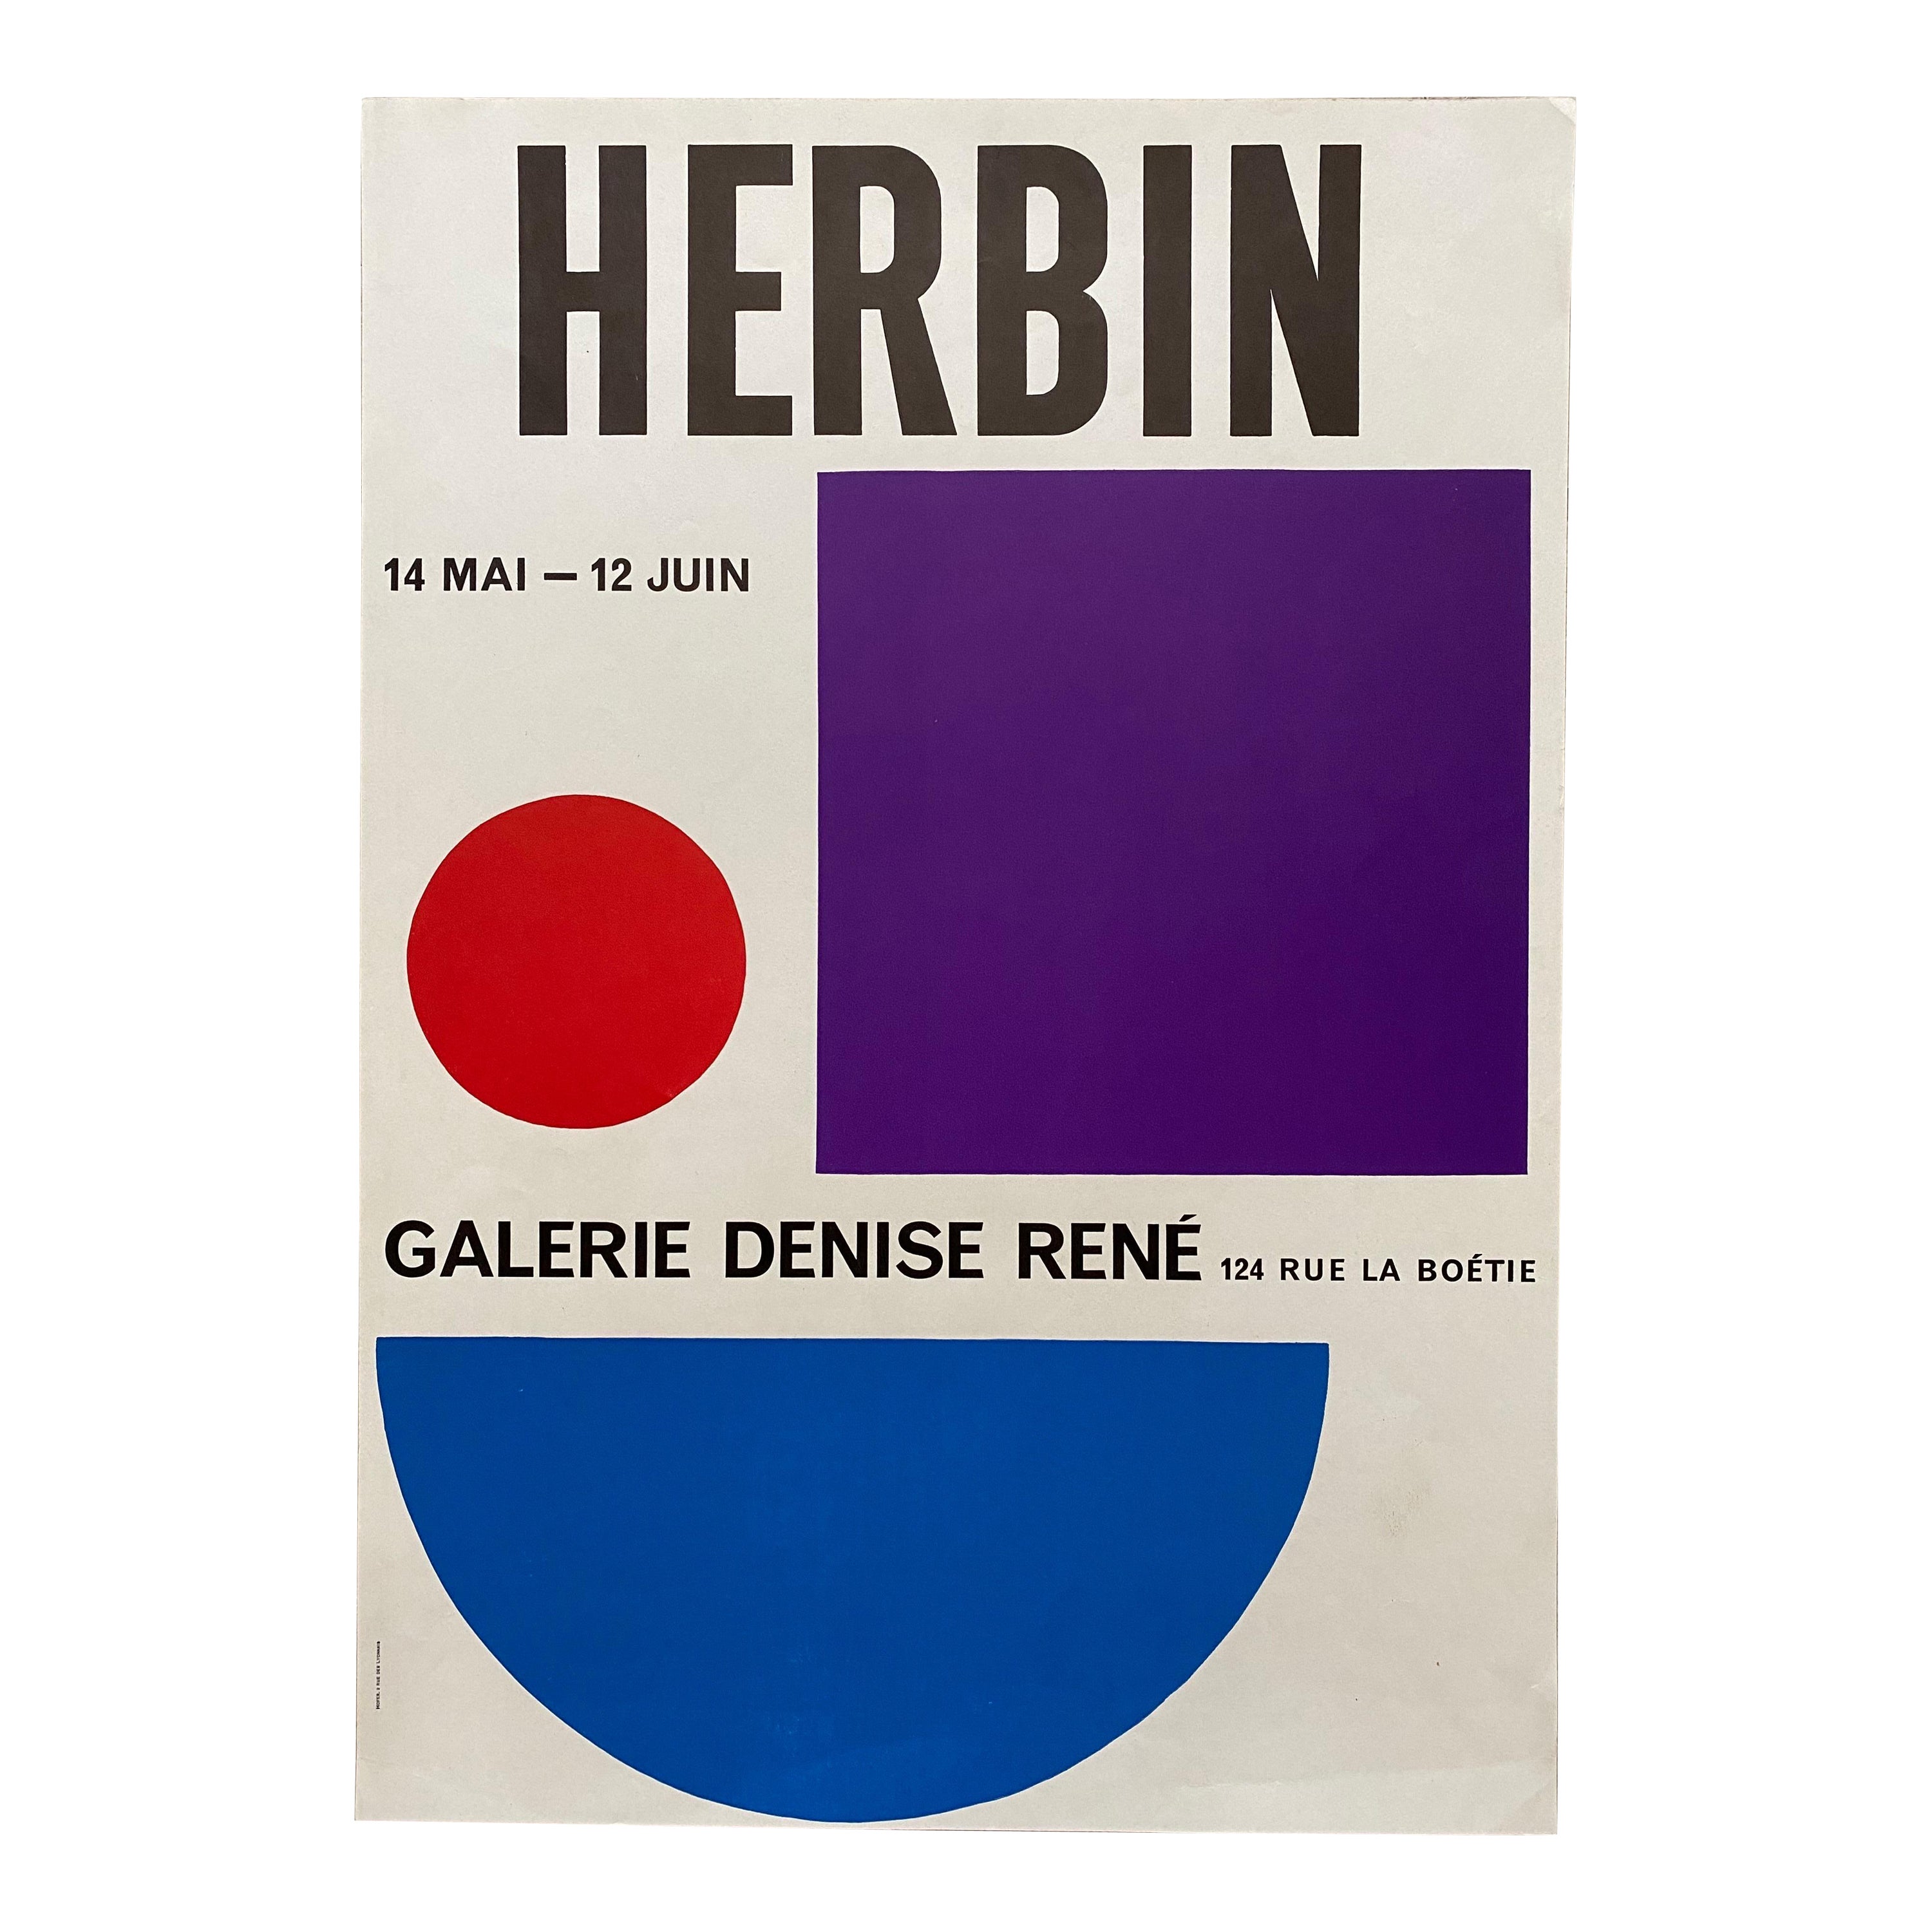 1954 Auguste Herbin Exhibition Print For Galerie Denise Rene, Paris 